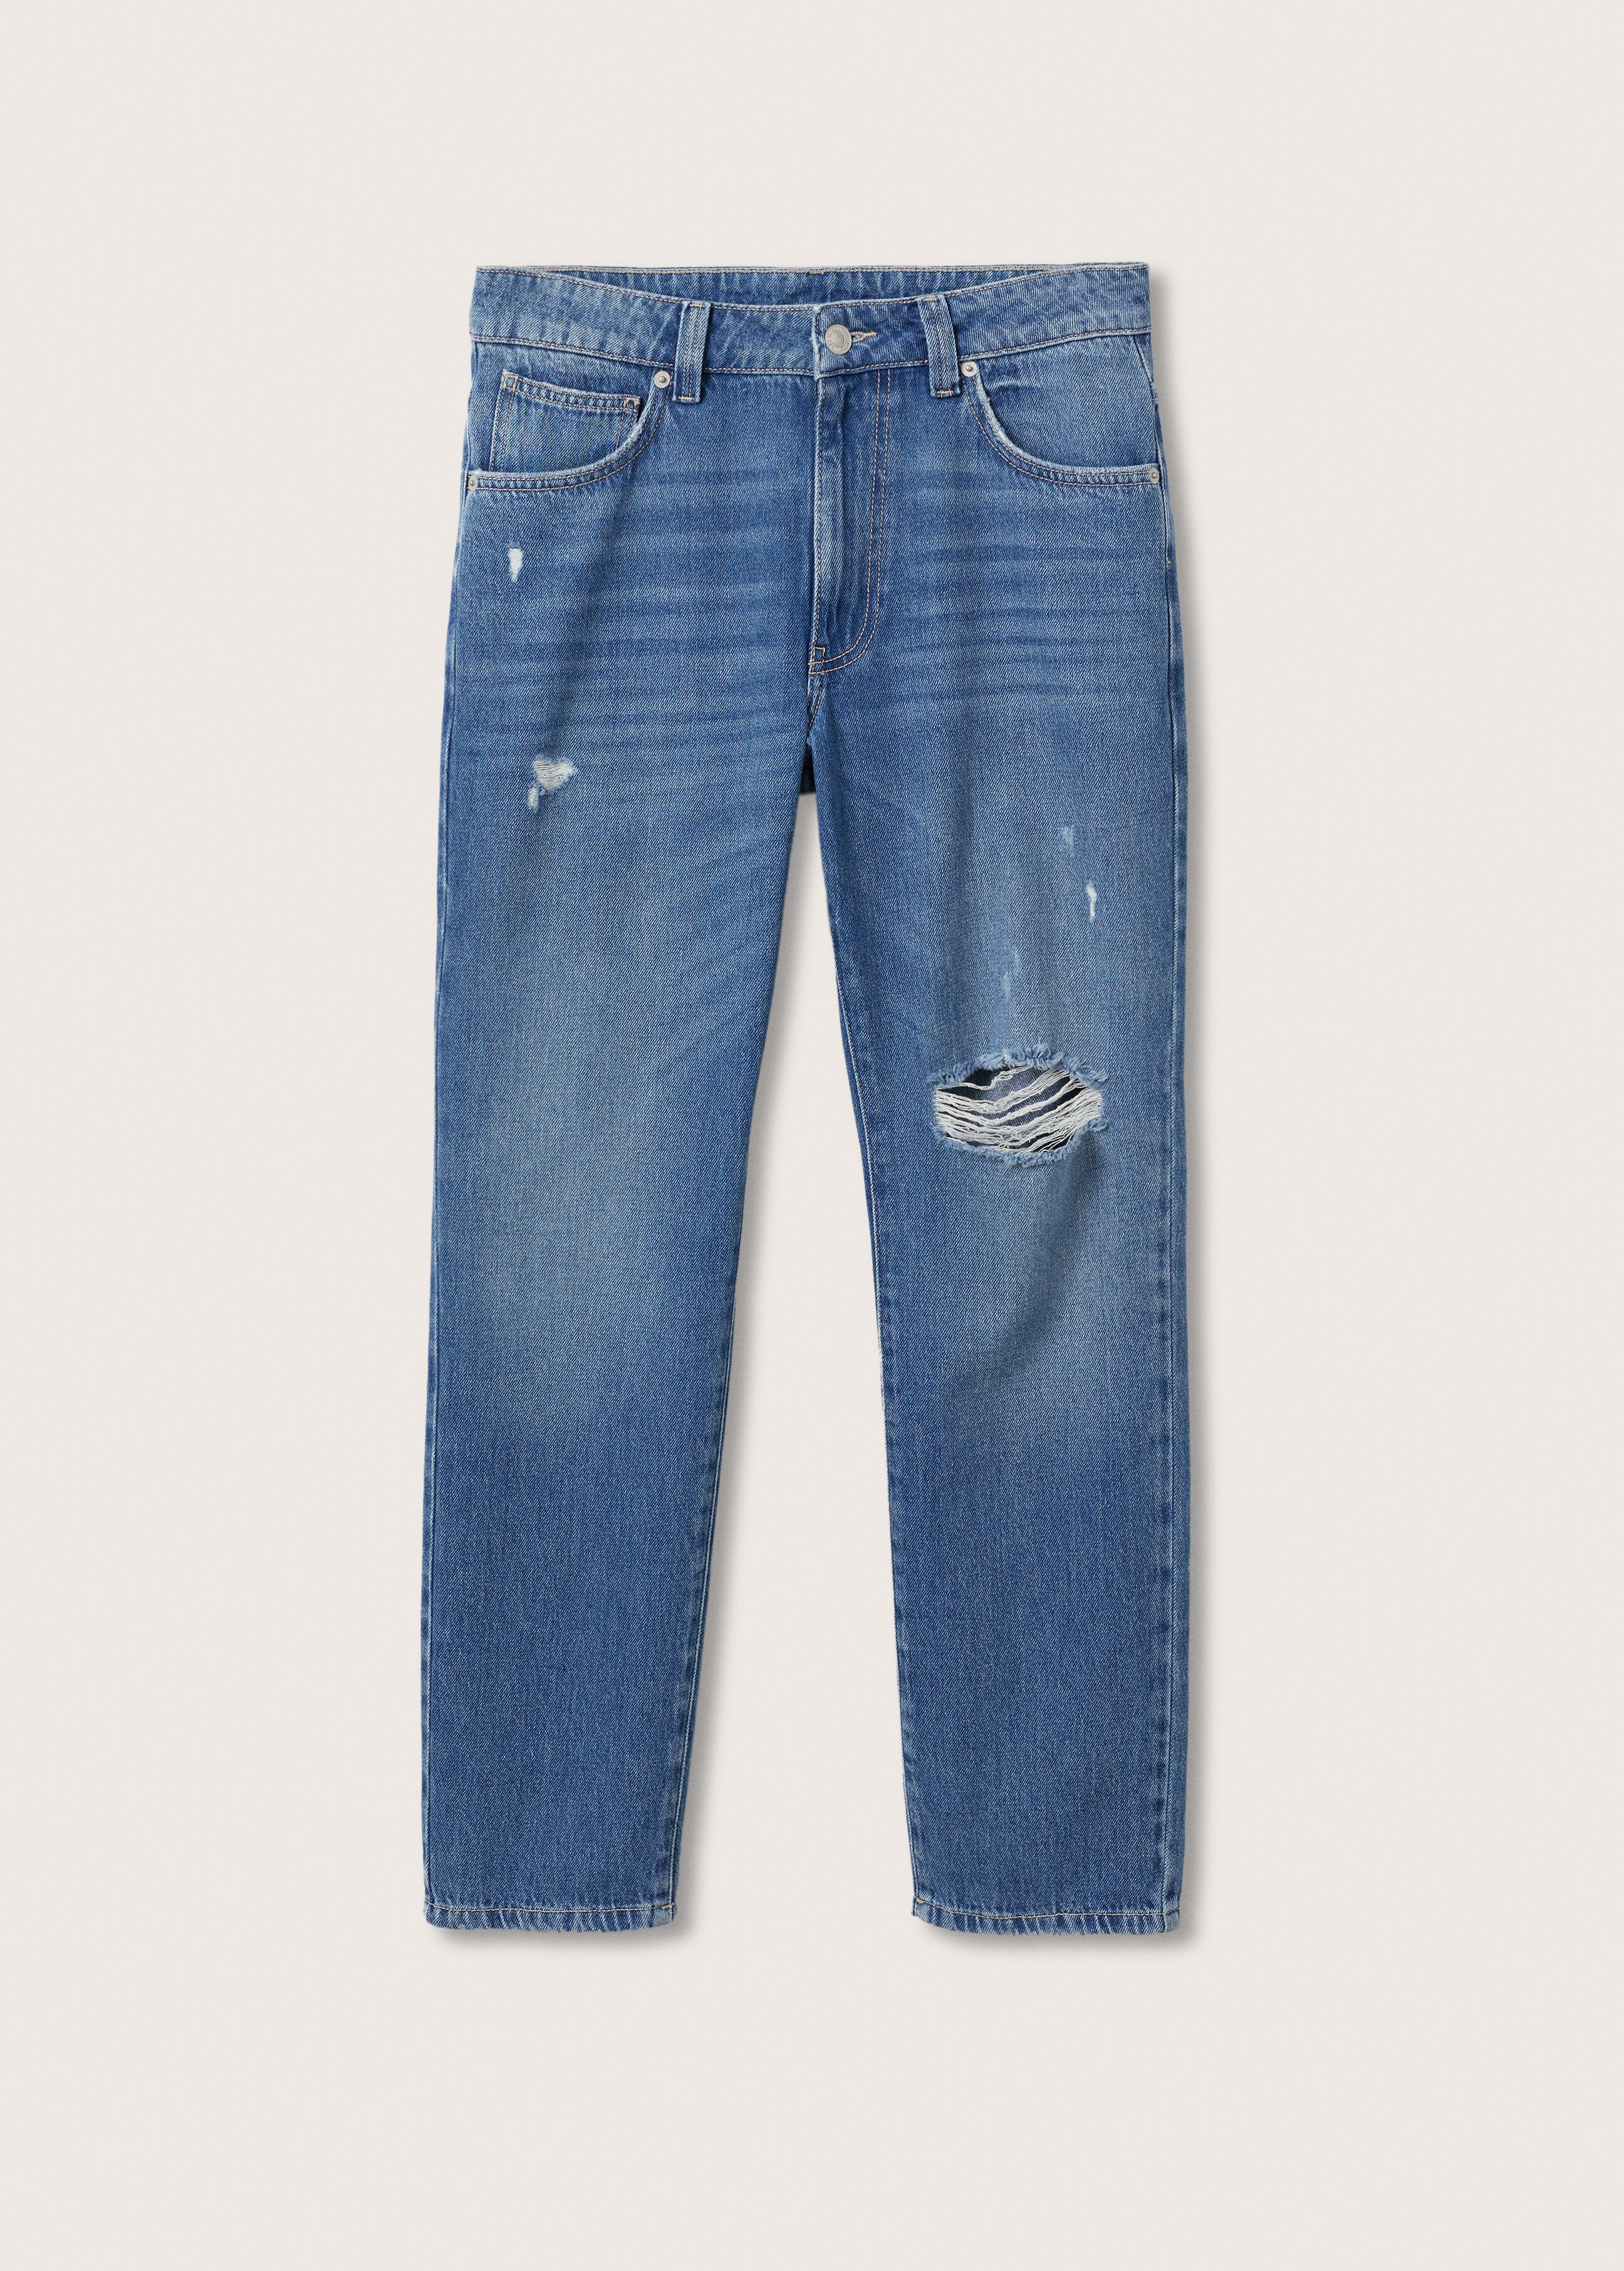 Decorative ripped regular jeans